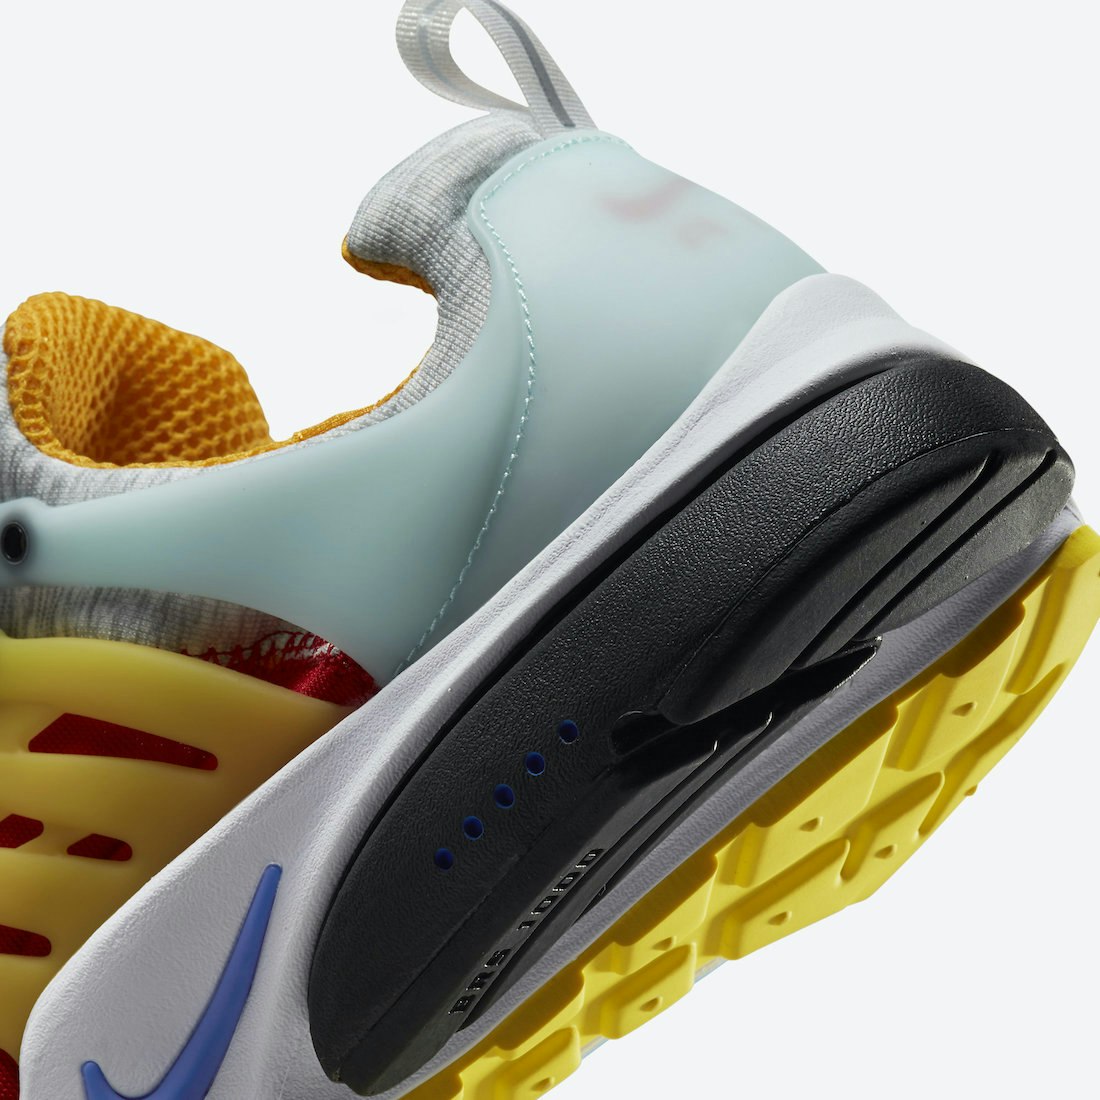 Nike Air Presto “What The” 